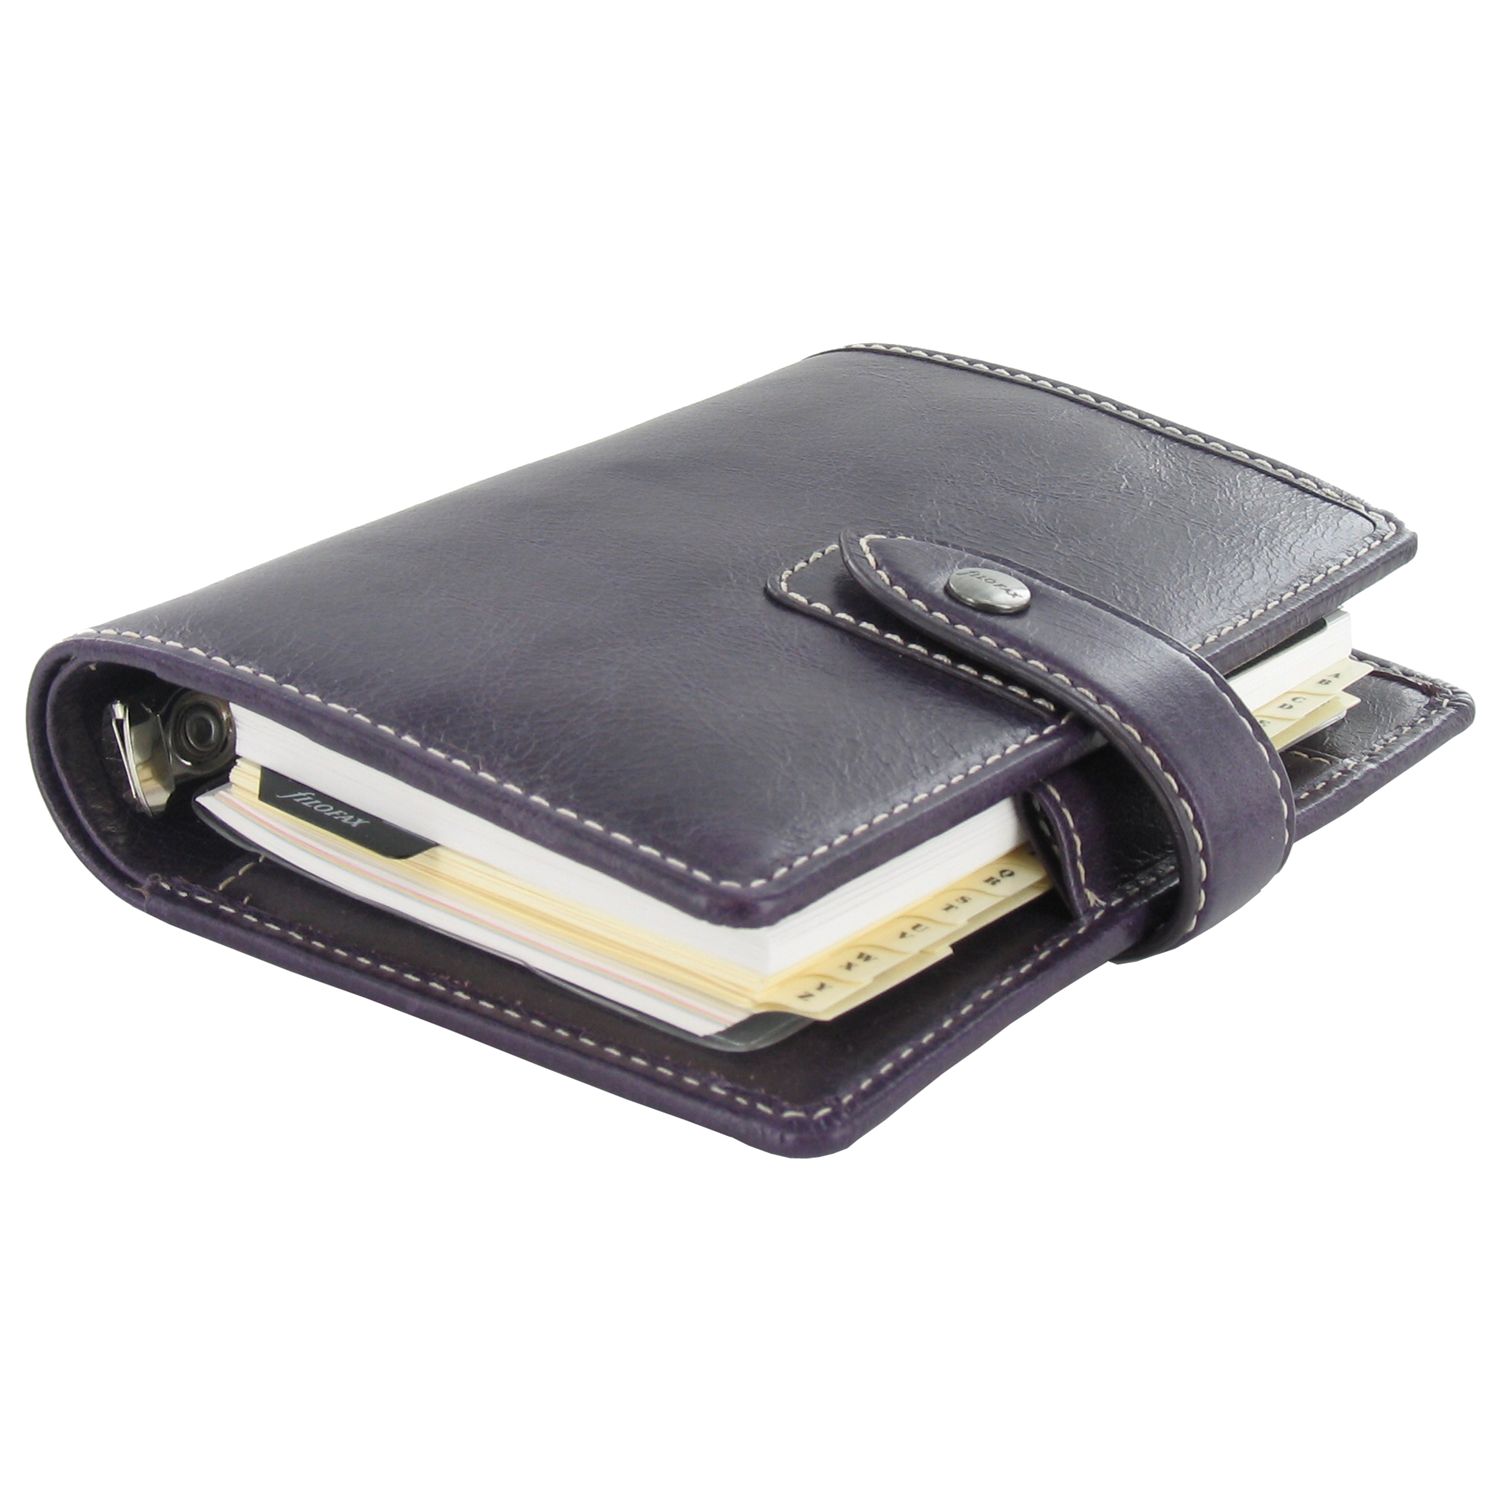 Filofax Malden Leather Pocket Organiser, Purple at John Lewis & Partners